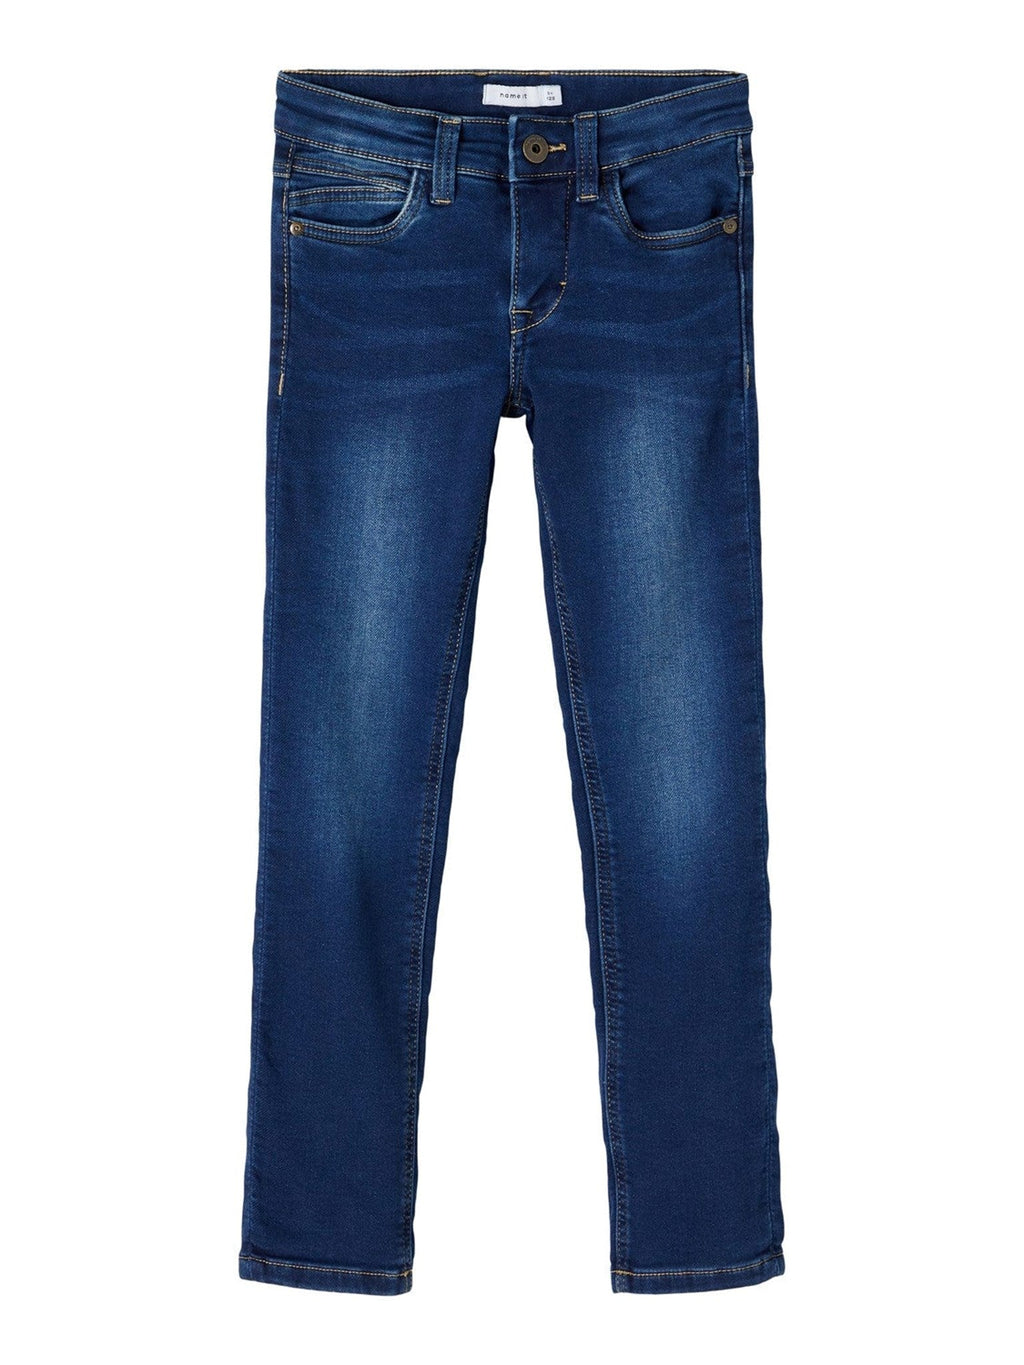 Jeans Theo - Denim azul oscuro